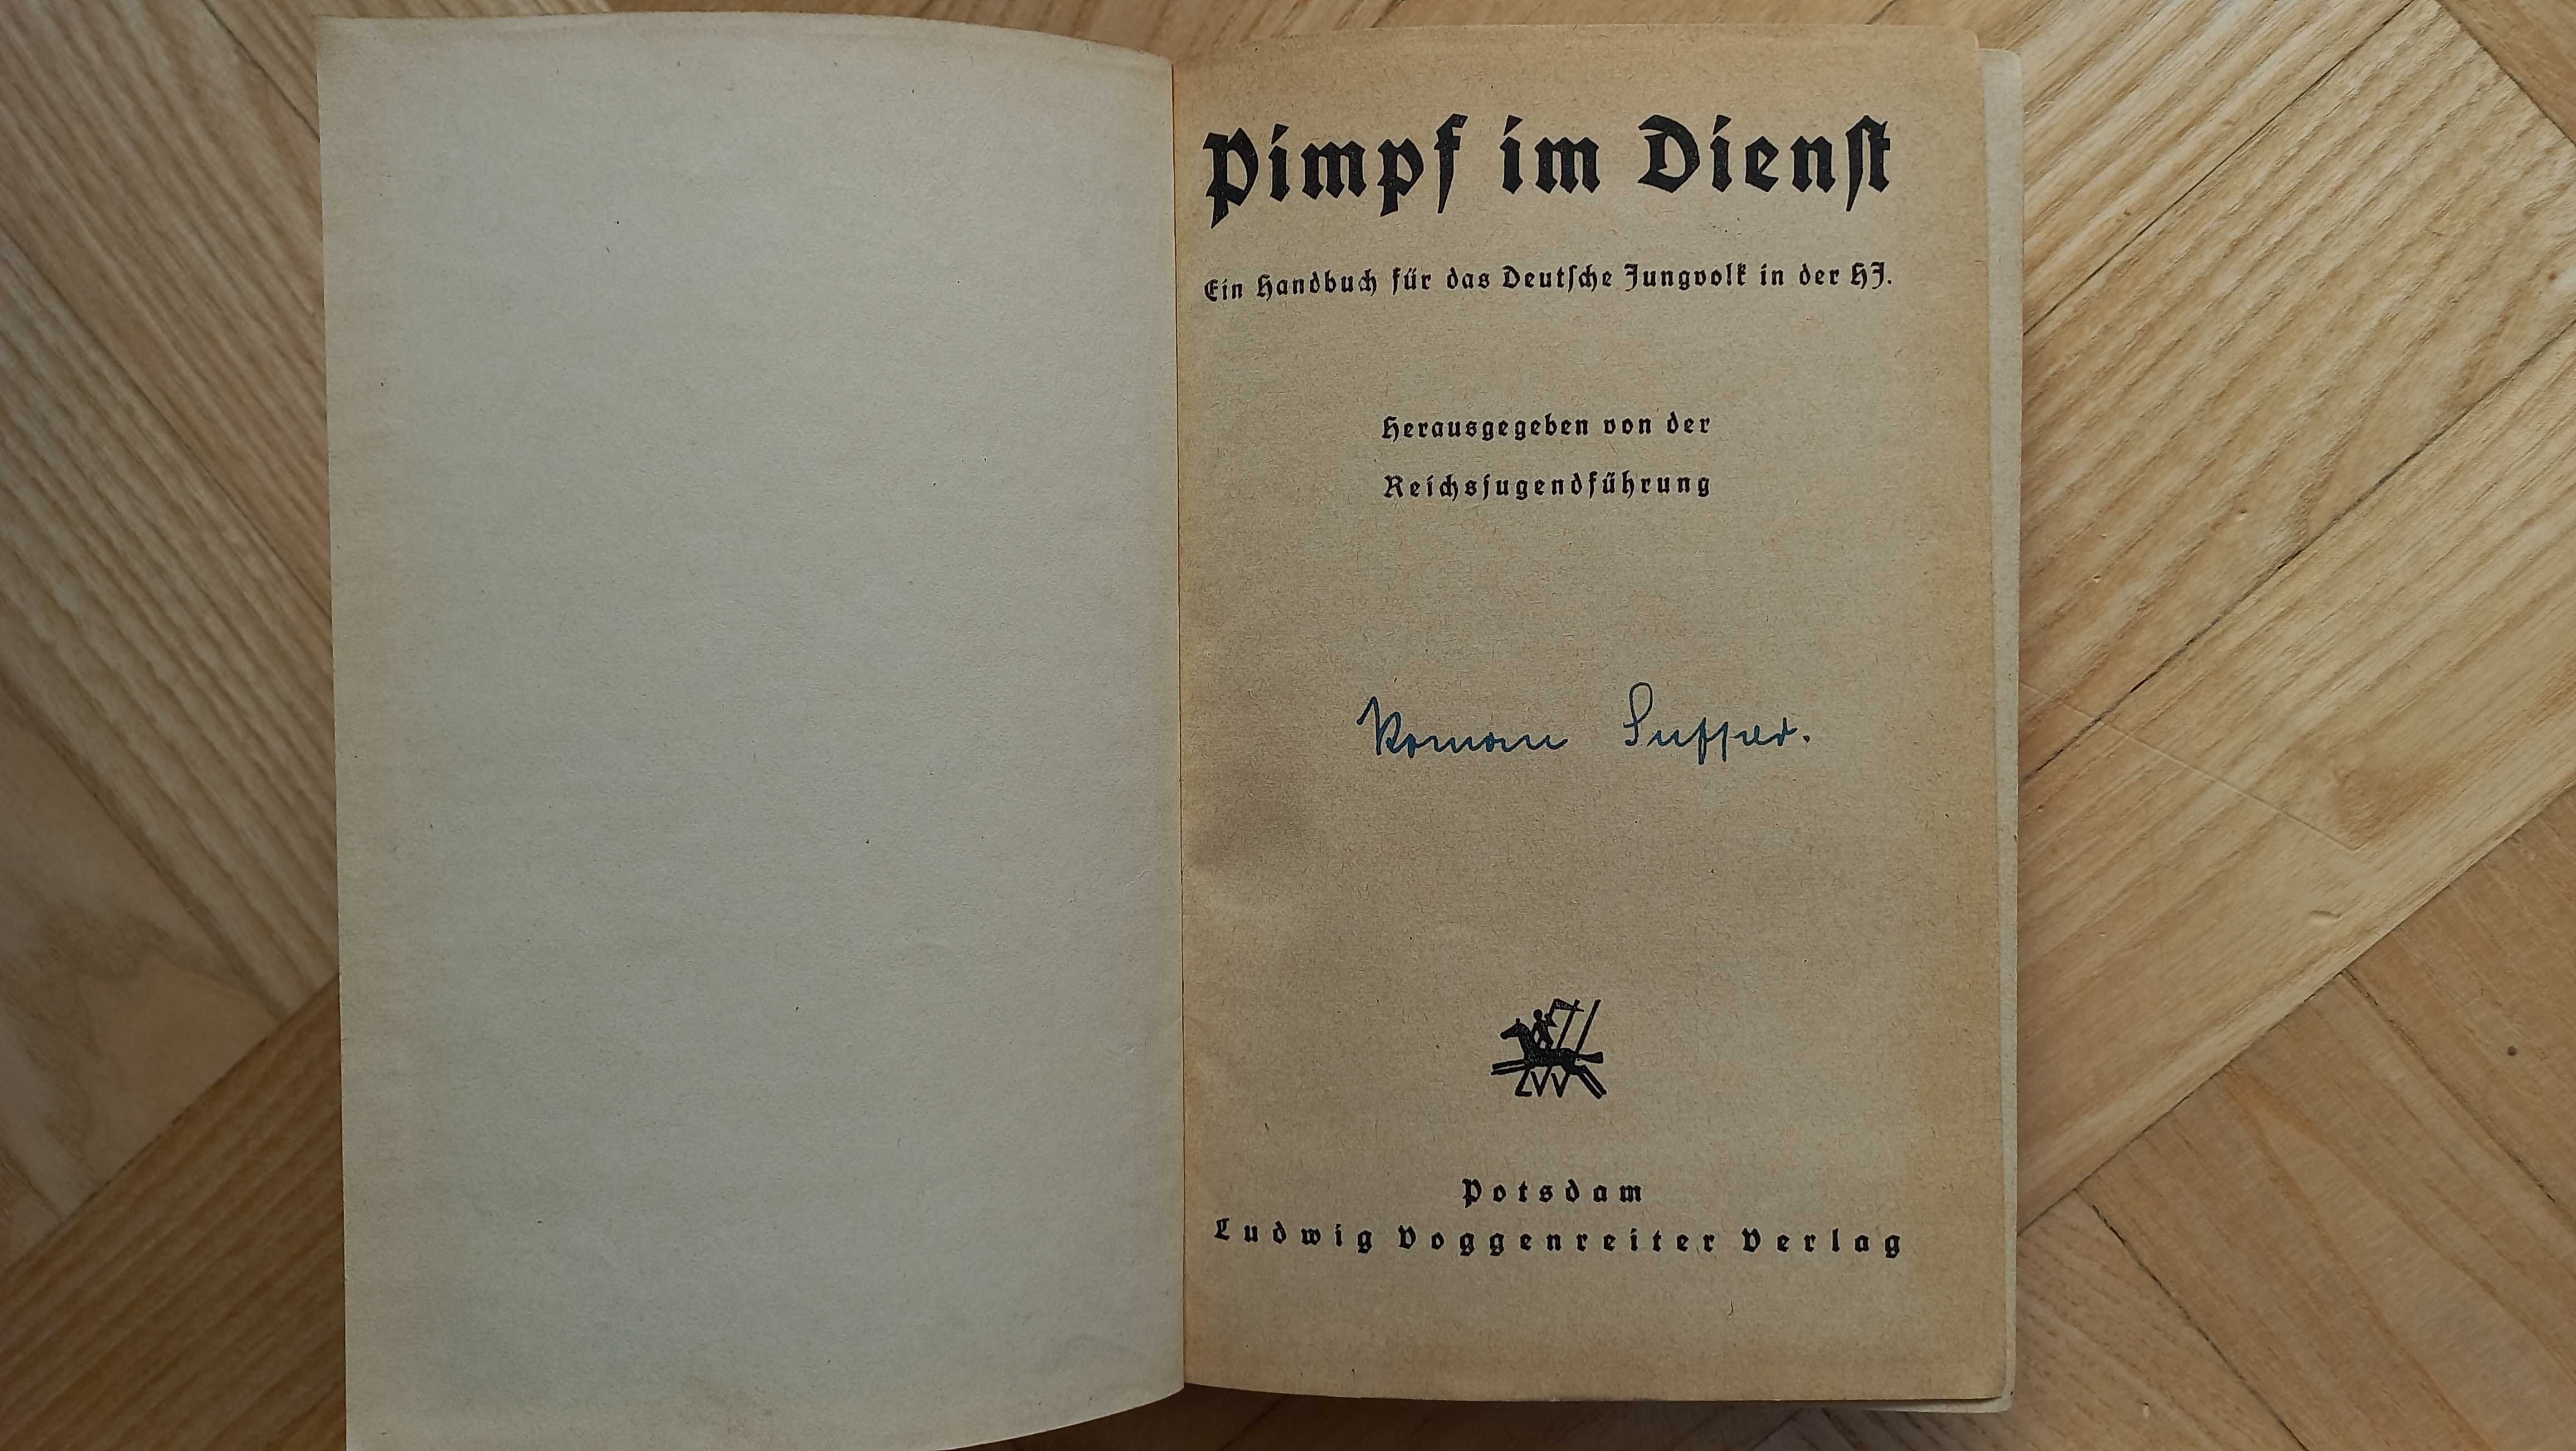 Pimpf im dienst  * poradnik - instruktaż H.J. *  1938